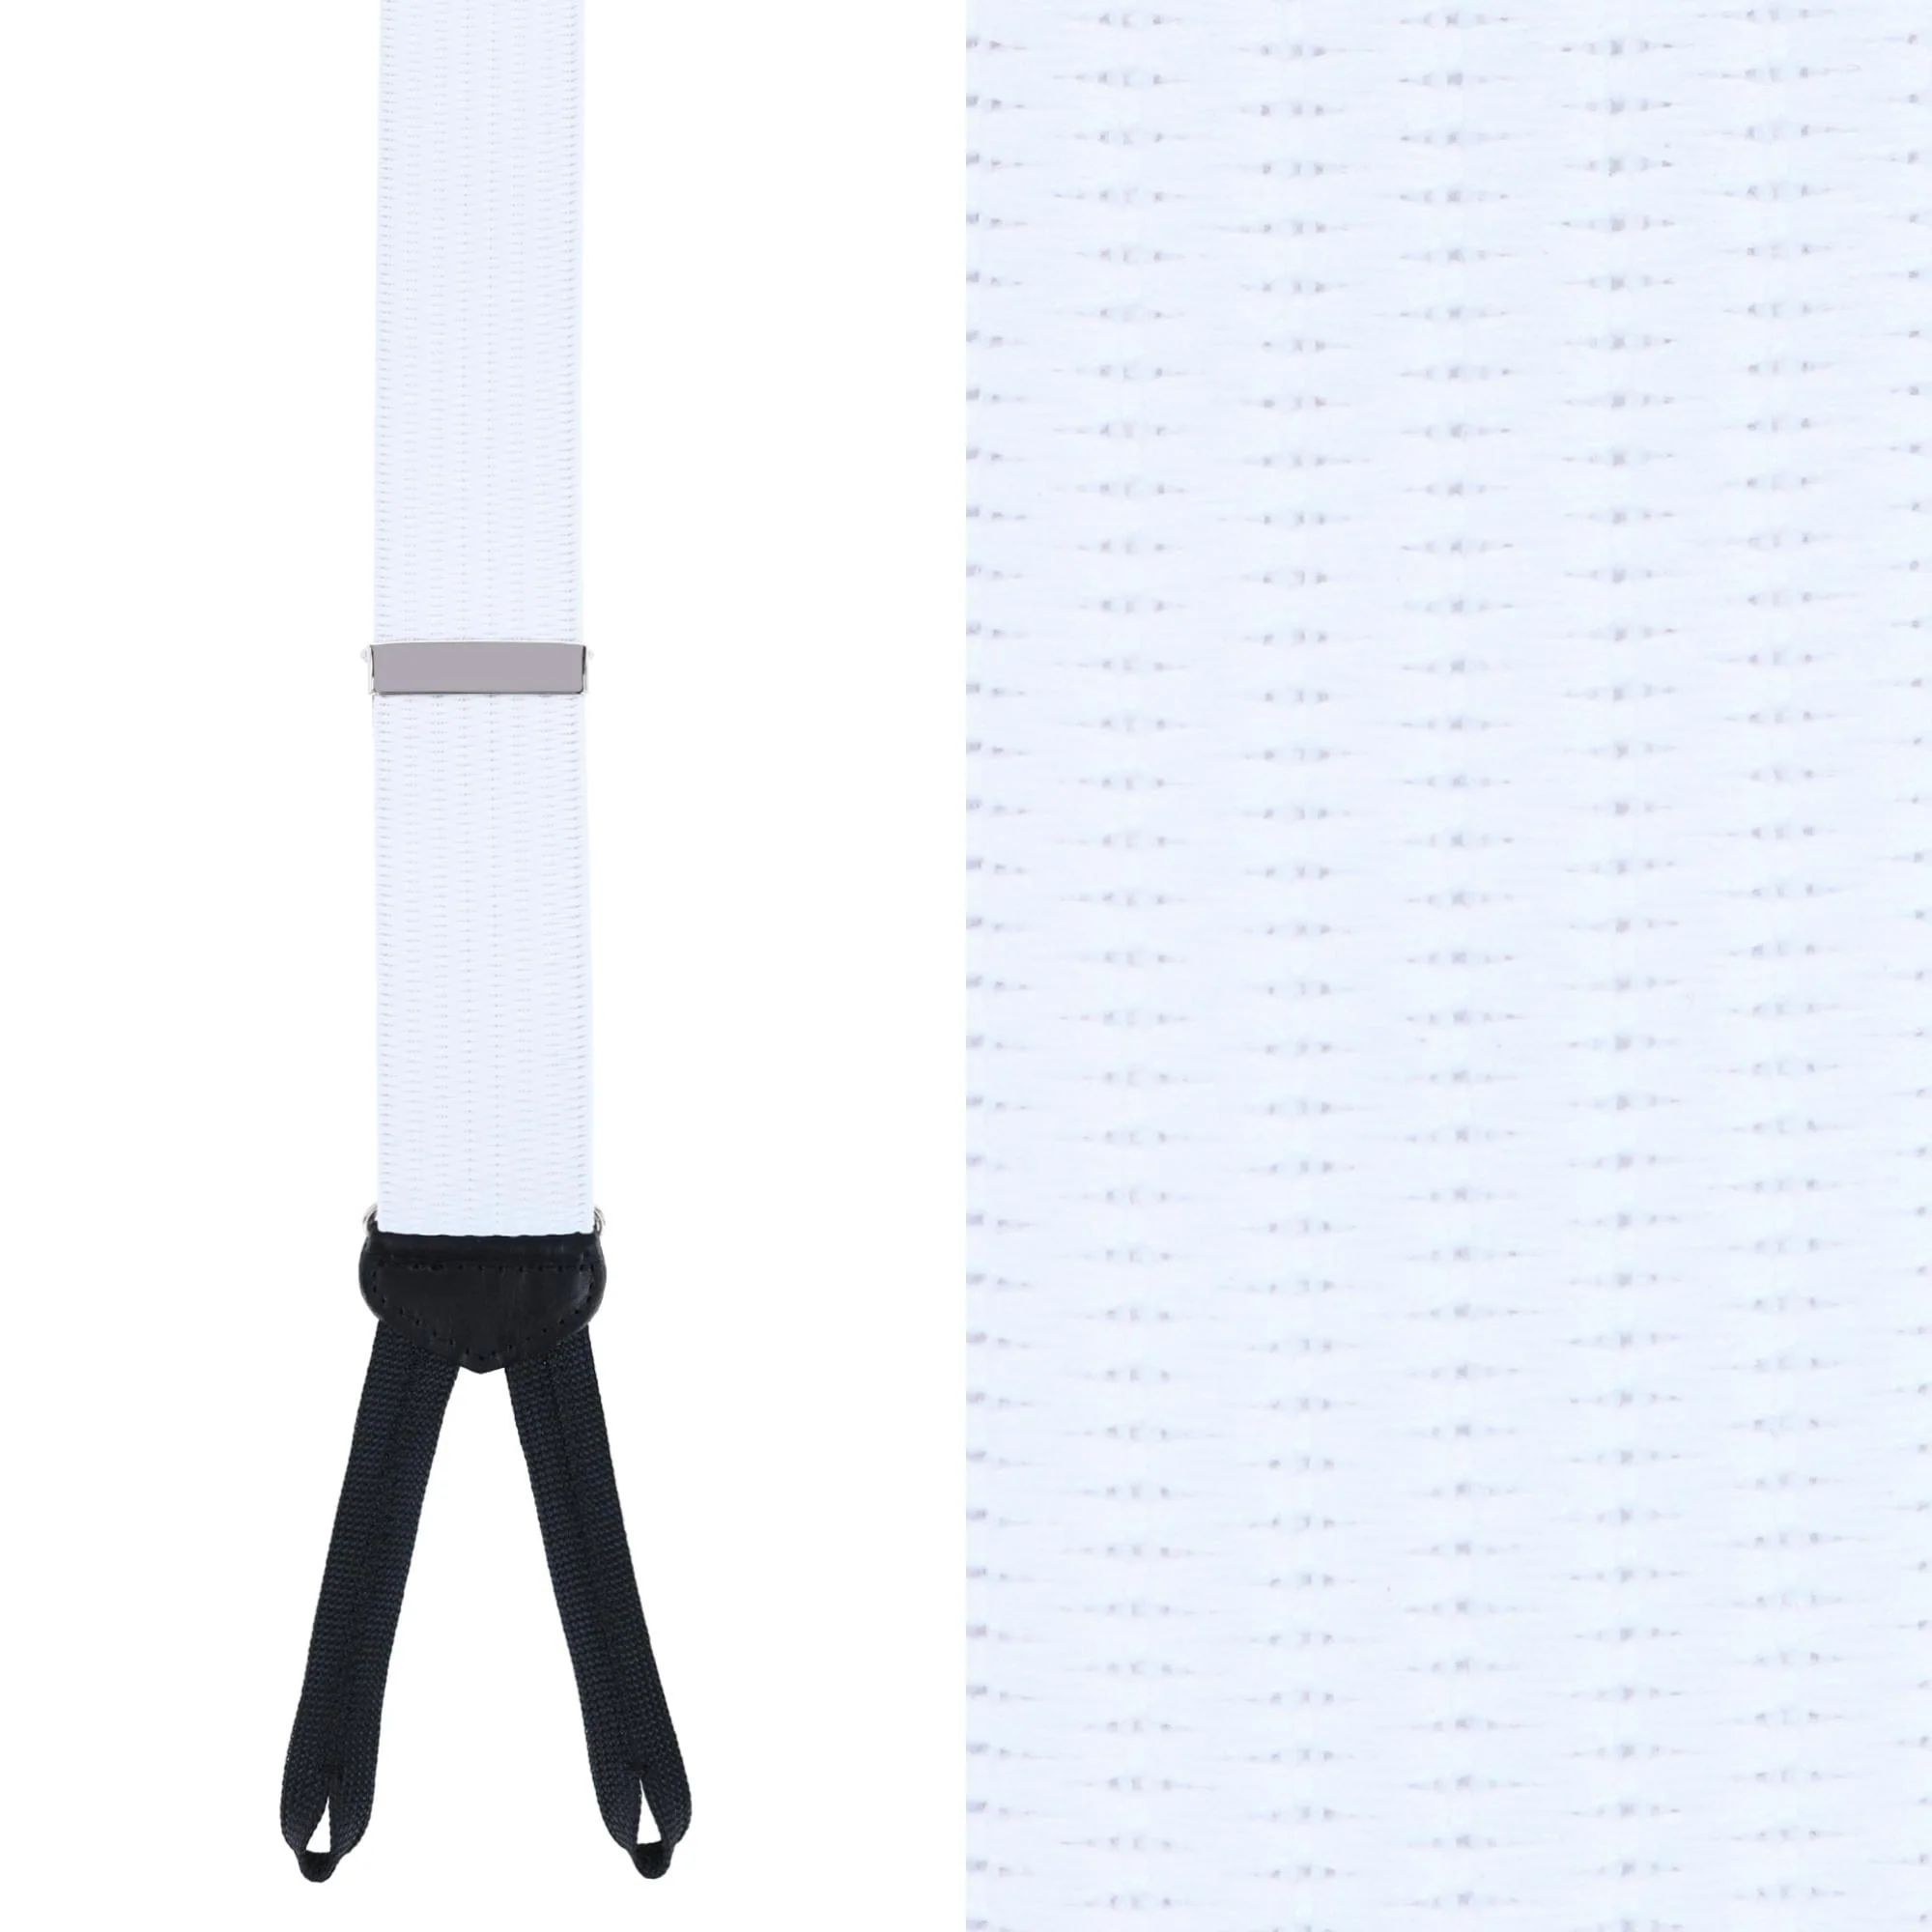 Regal Formal White Stretch Suspenders